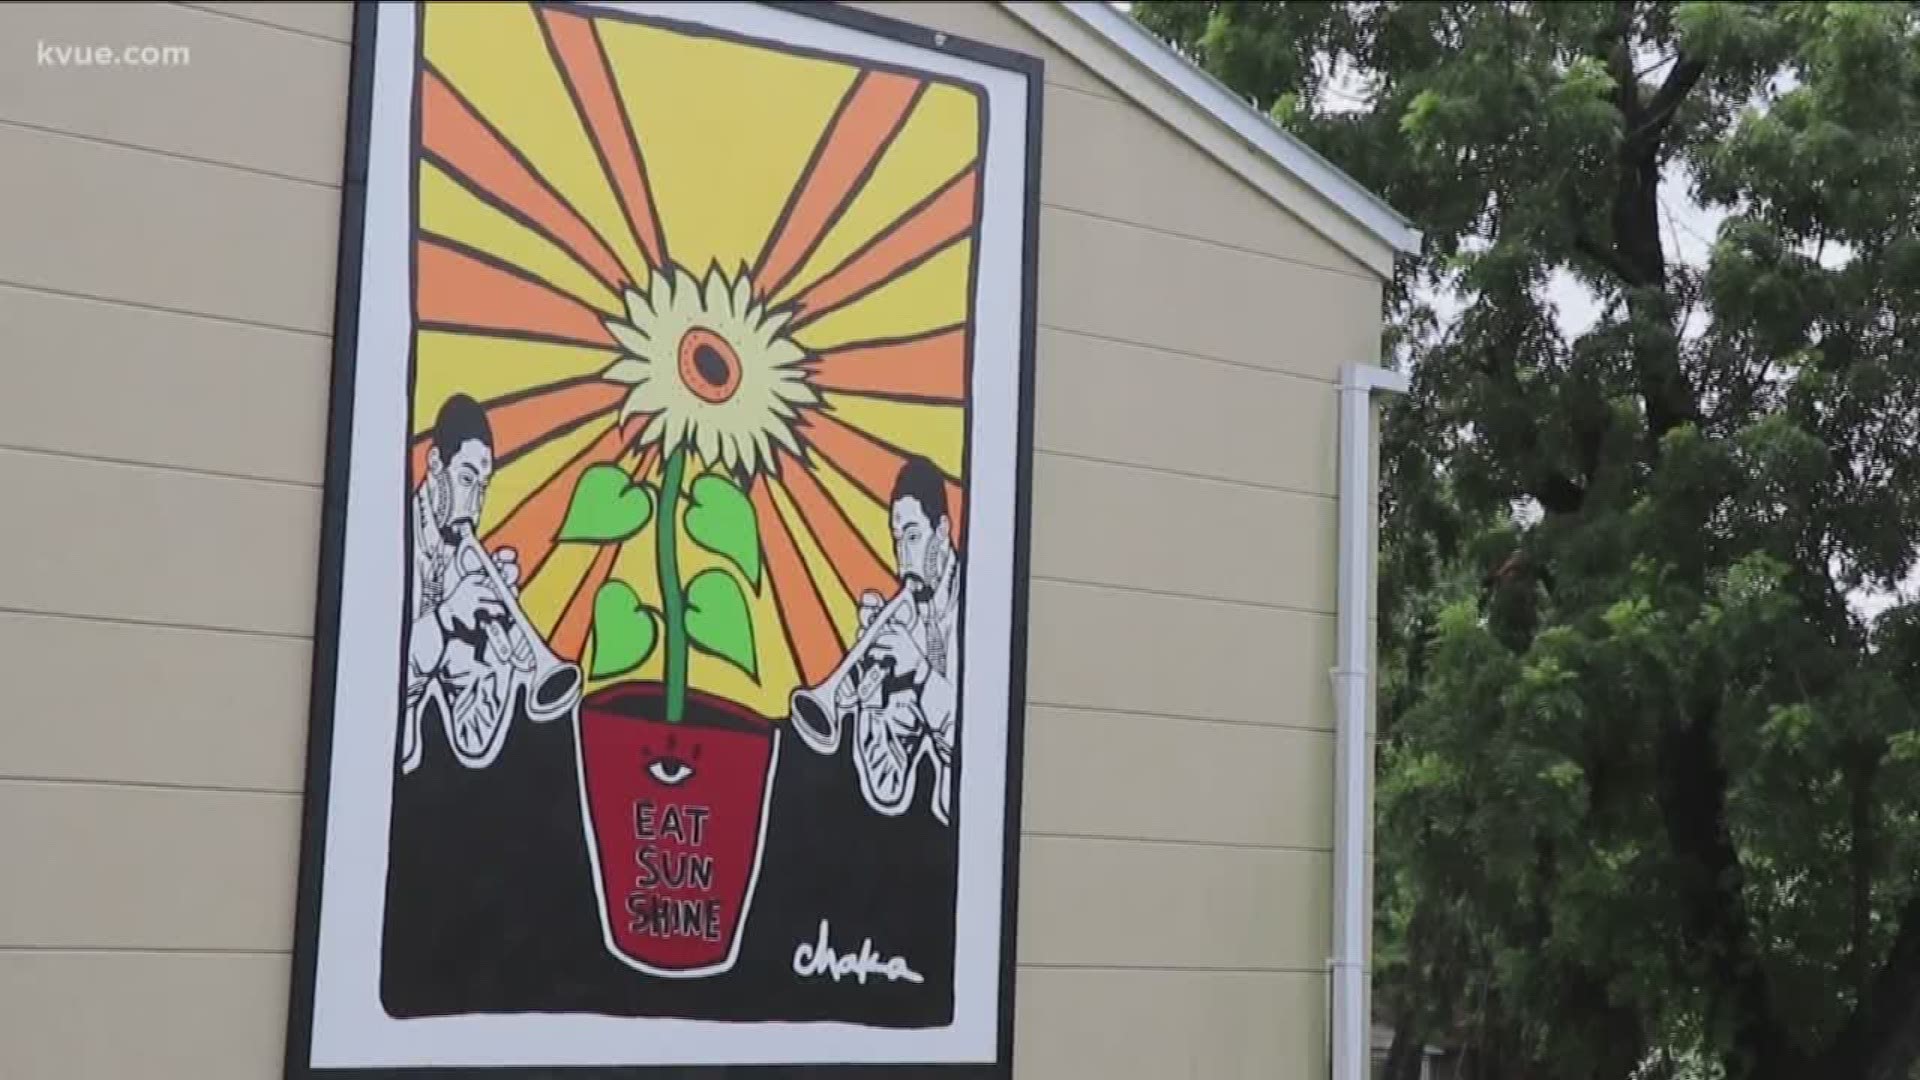 A new mural in East Austin, called "Eye Eat Sunshine," highlights local jazz musician Kenny Dorham.